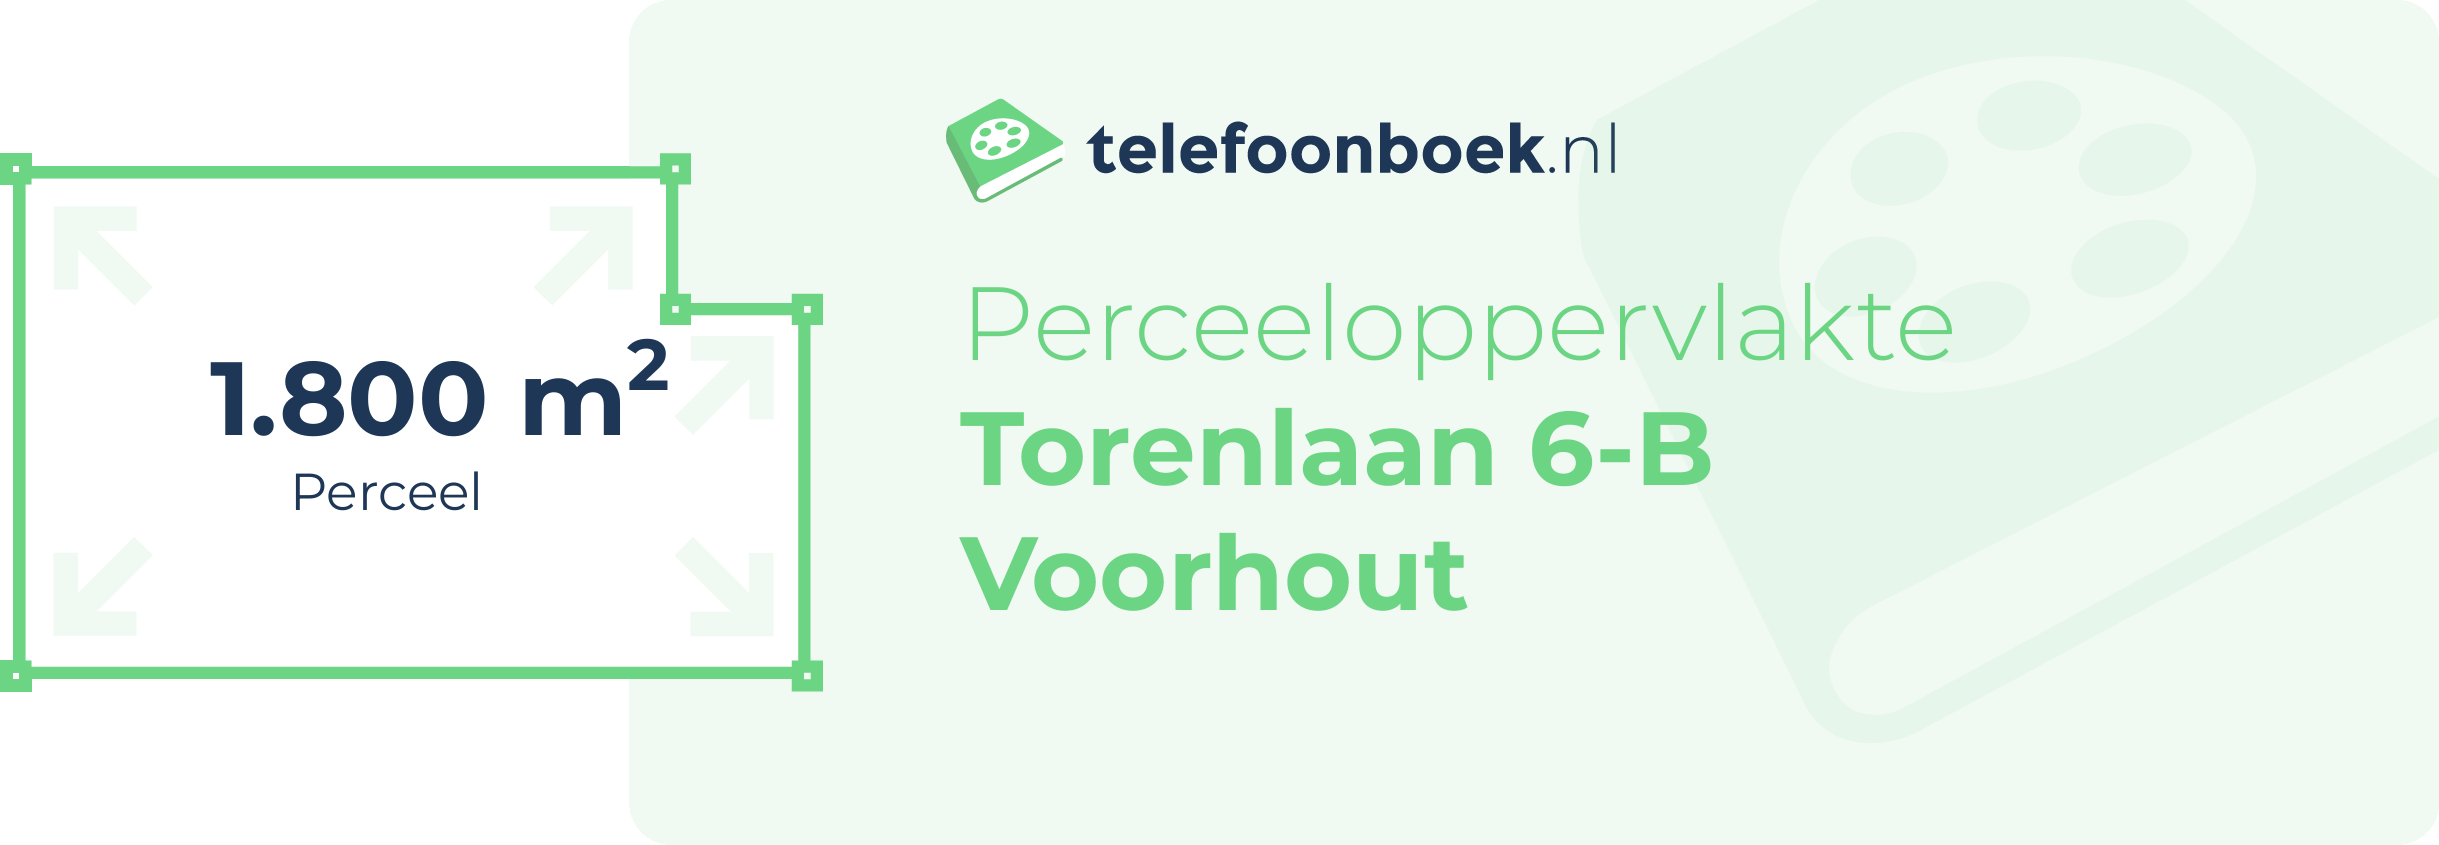 Perceeloppervlakte Torenlaan 6-B Voorhout